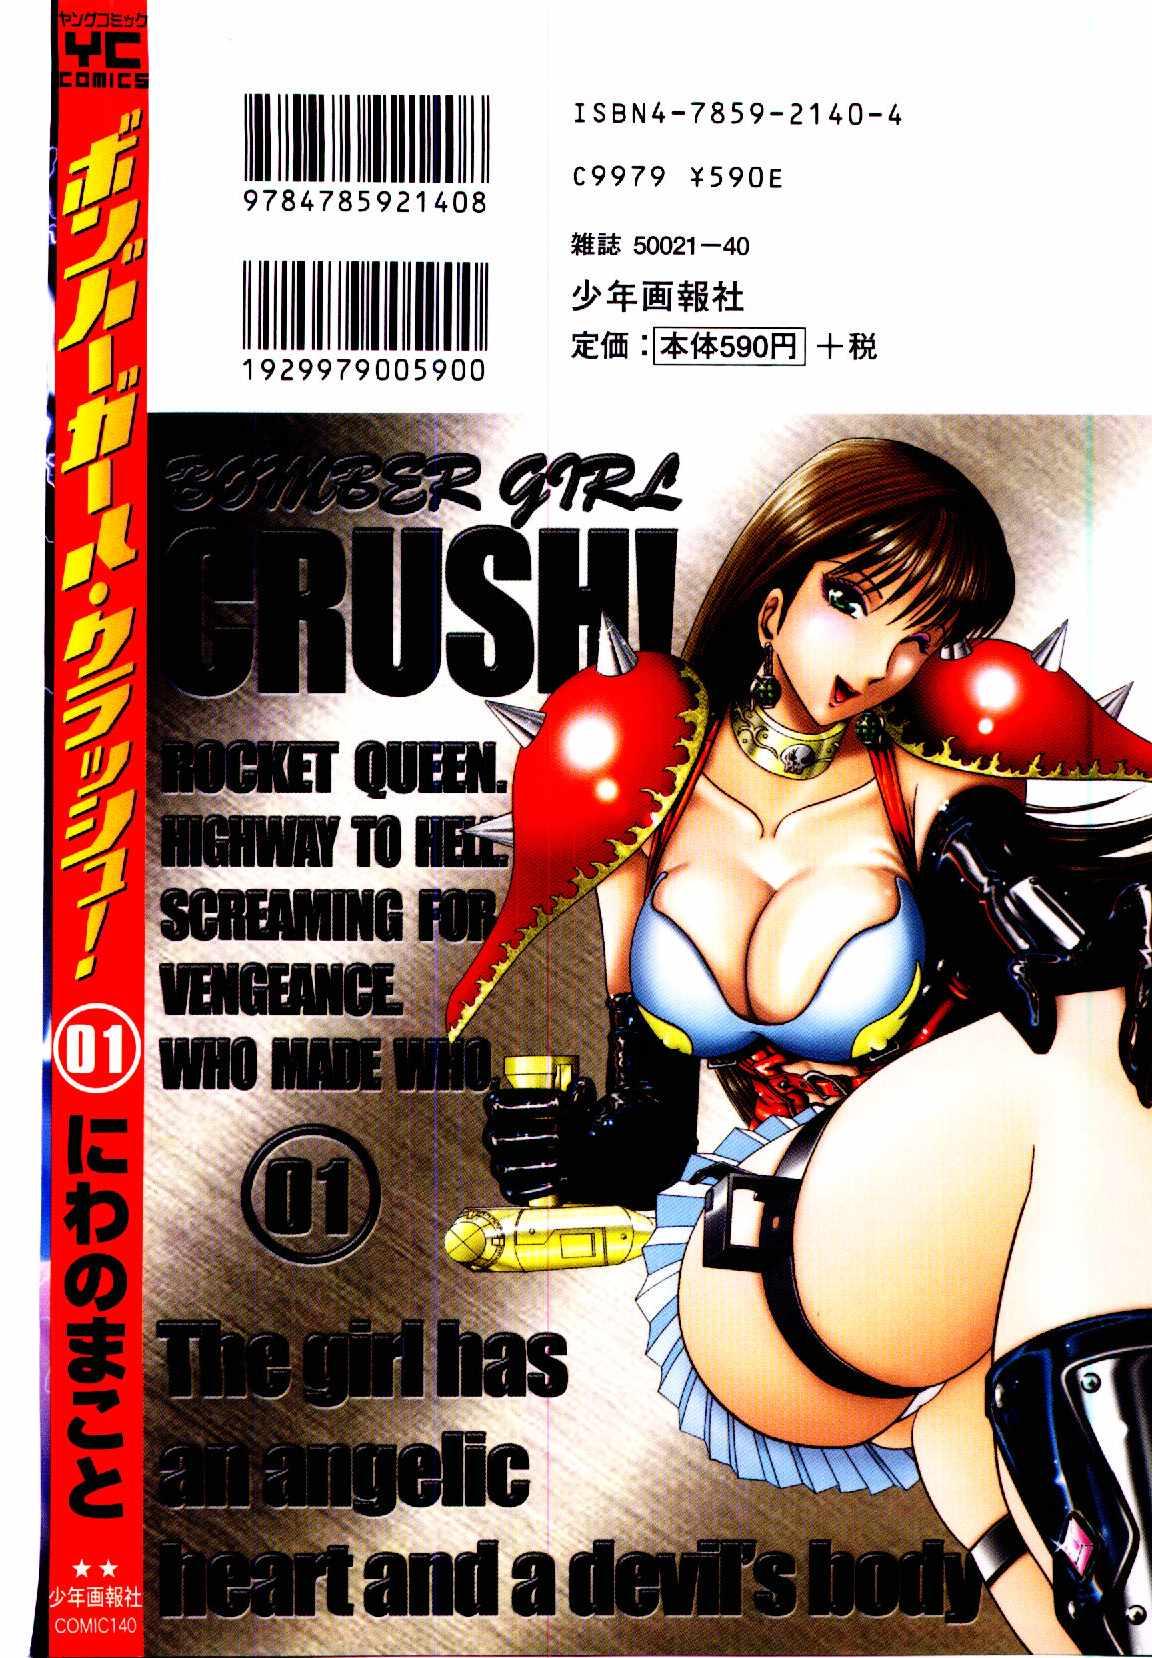 Bombergirl Crush Vol 1 133